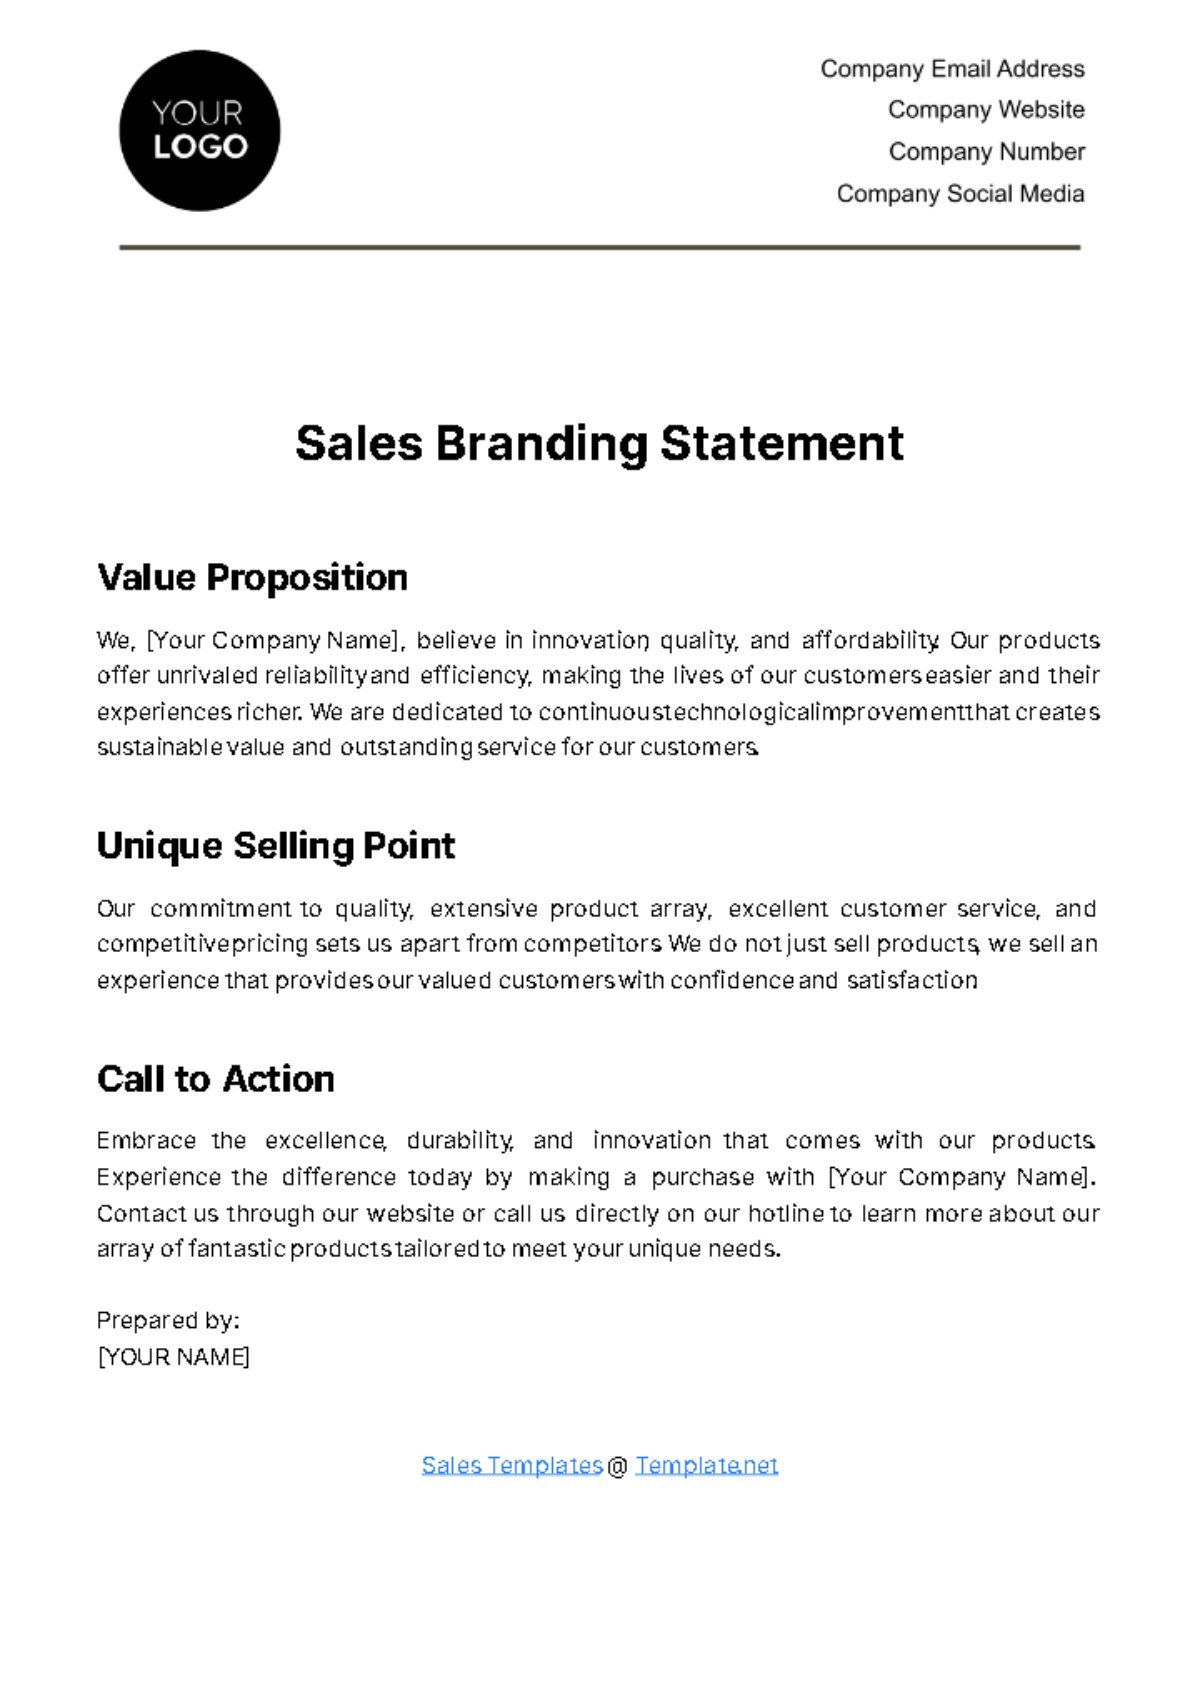 Sales Branding Statement Template